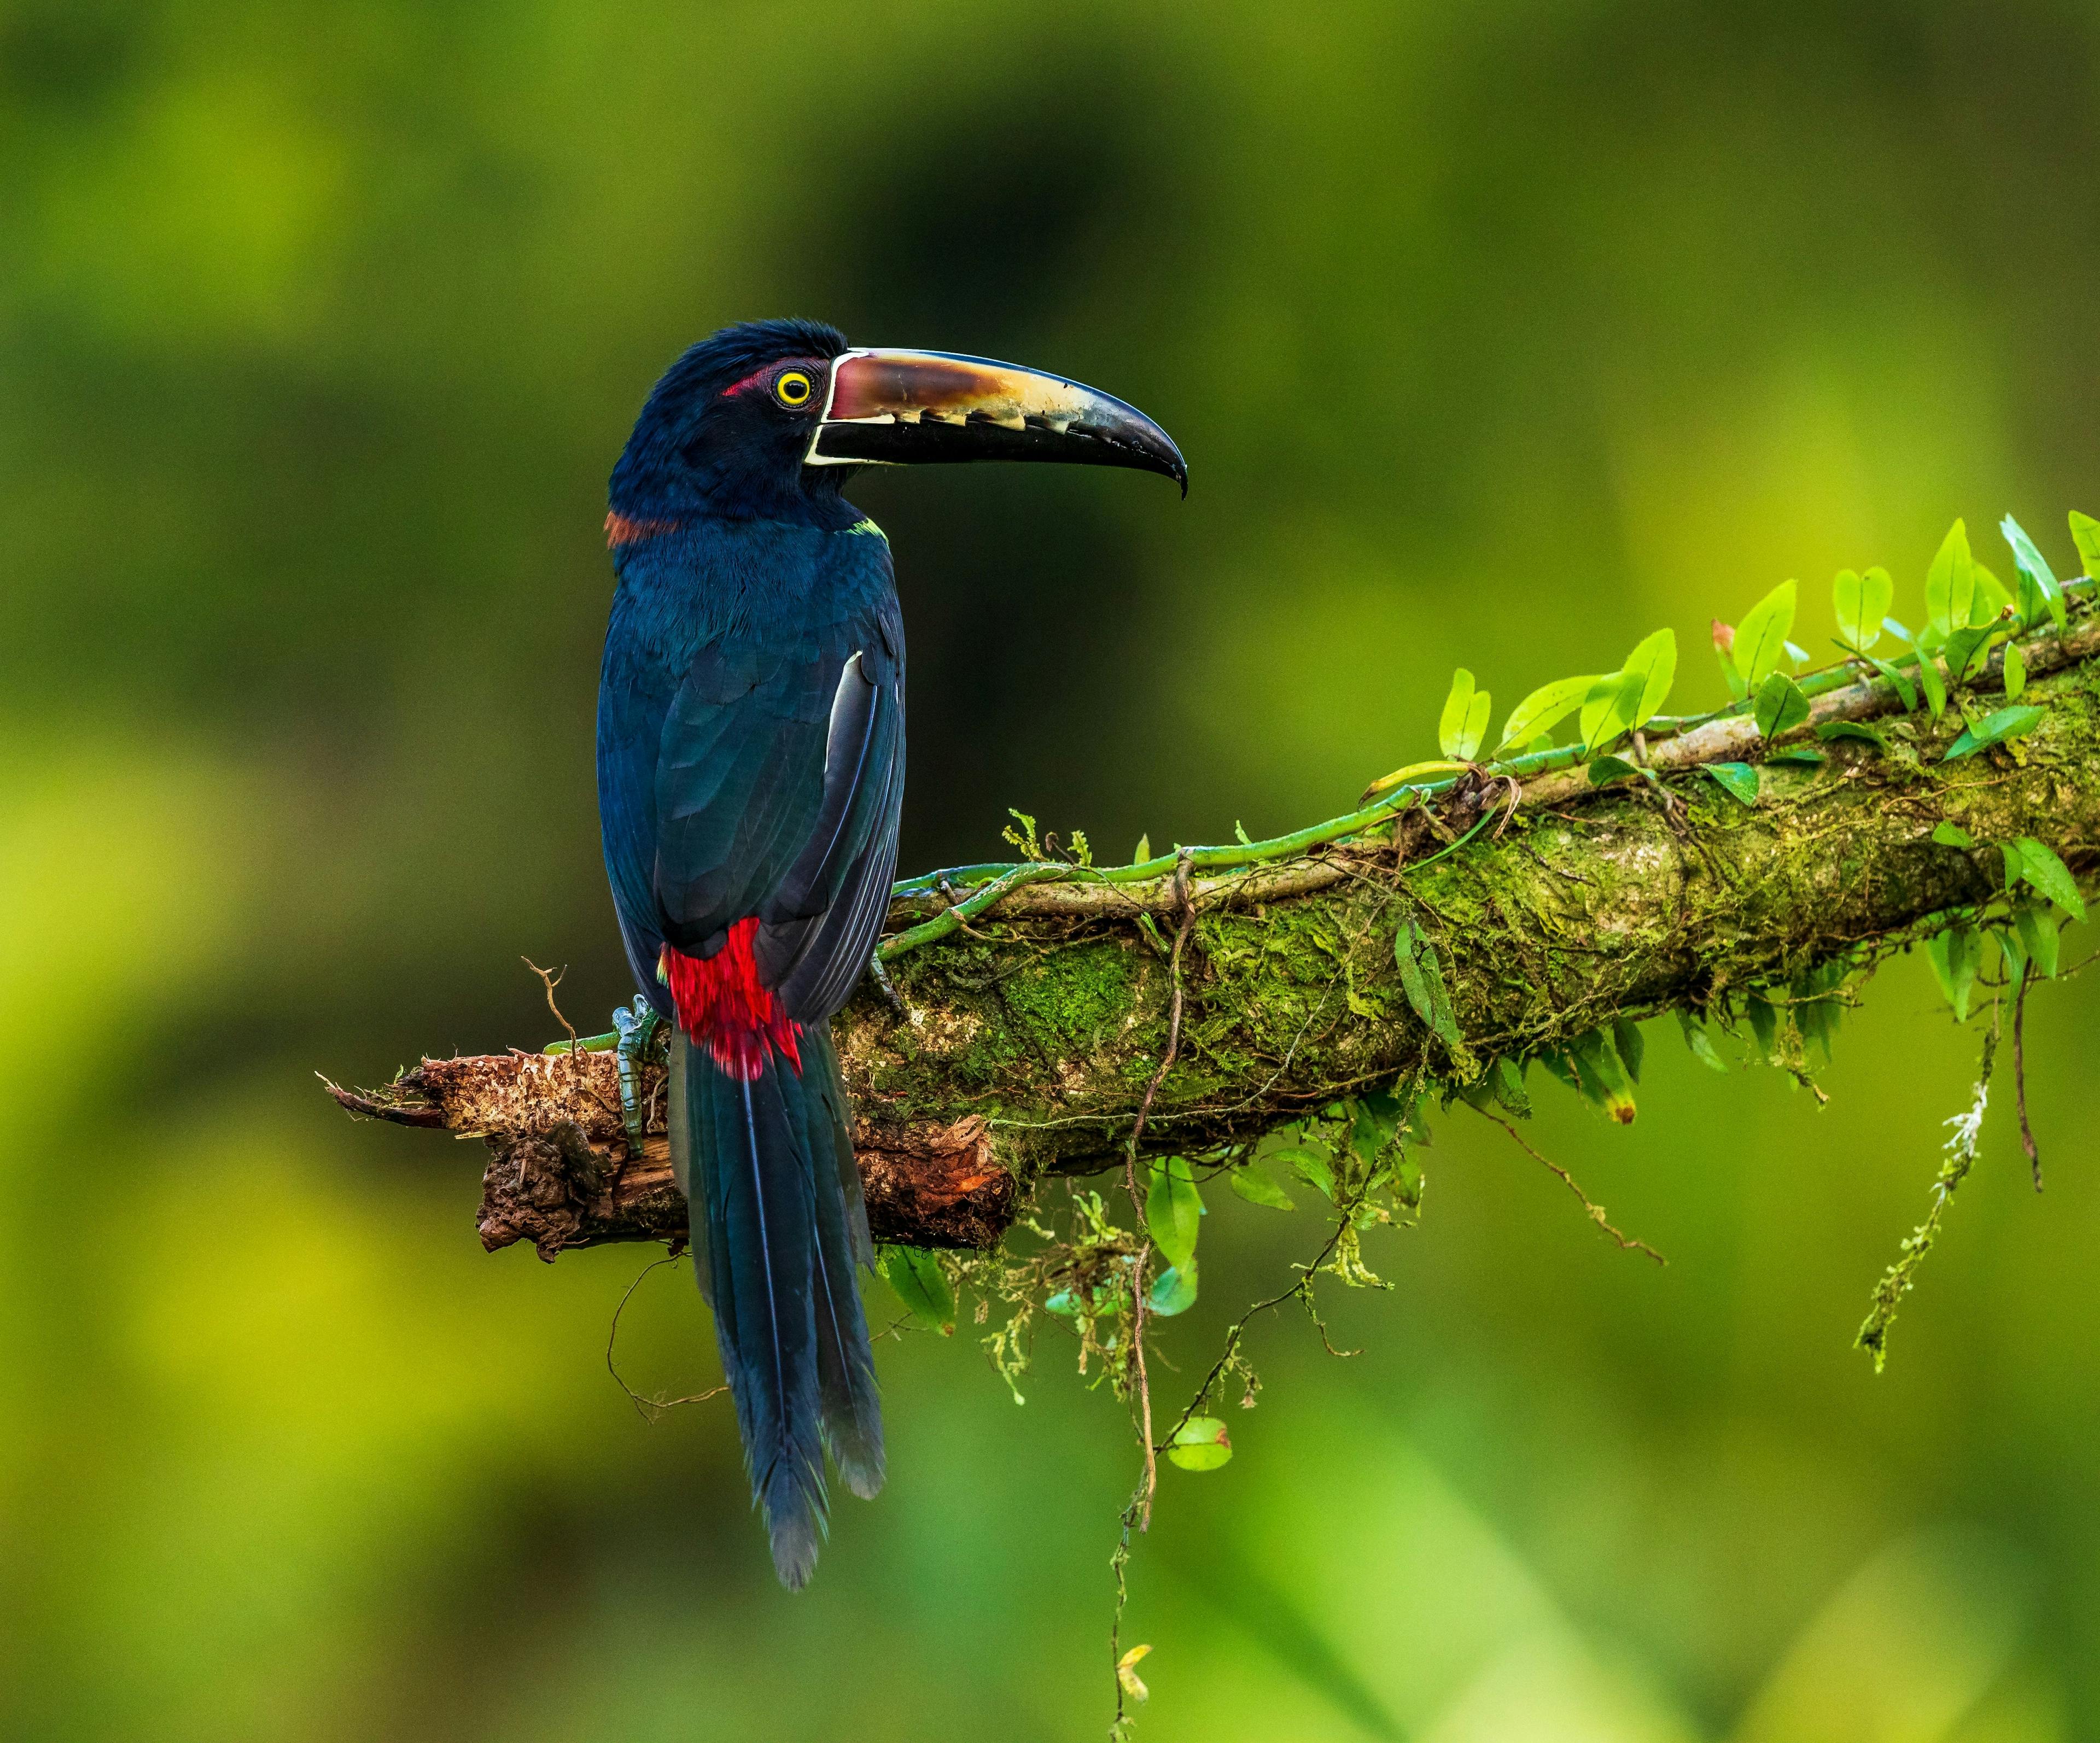 Exotic bird in Costa Rica rainforest.